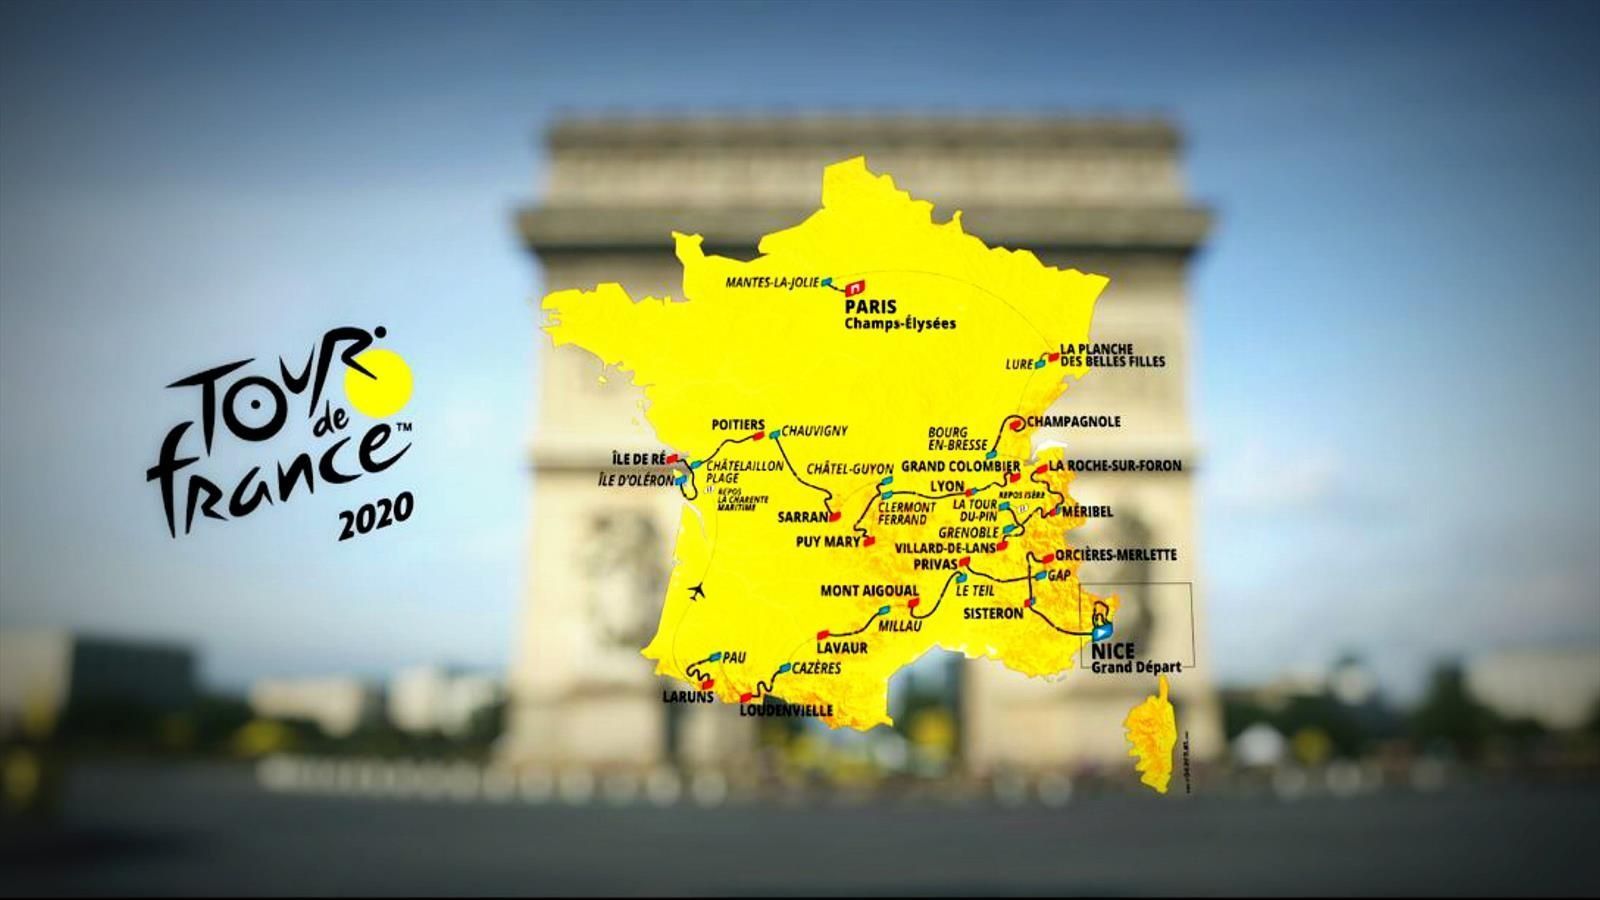 Tour De France 2020 PC Game Full Version Free Download